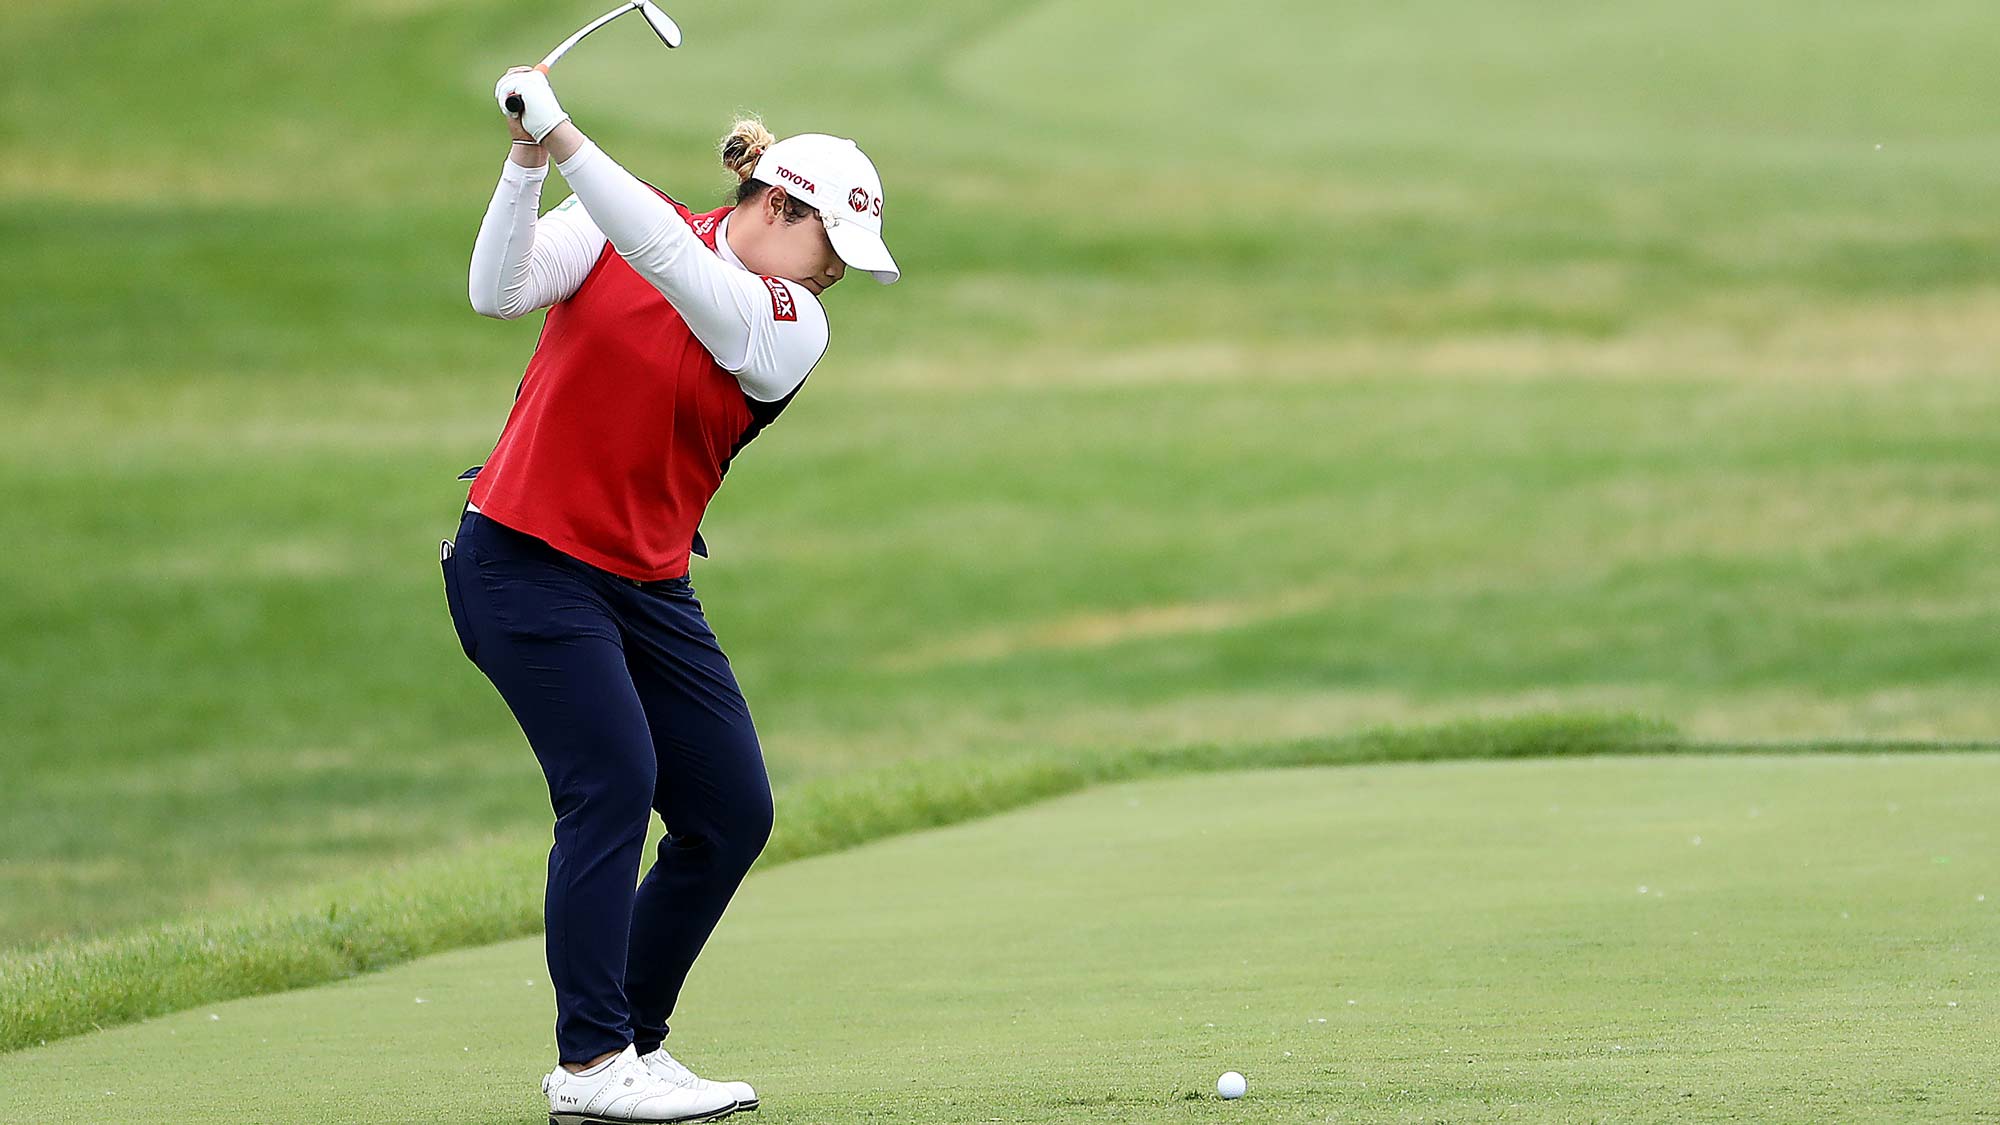 Ariya Jutanugarn of Thailand hits her first shot on the 2nd hole during the third round of the KPMG Women's PGA Championship